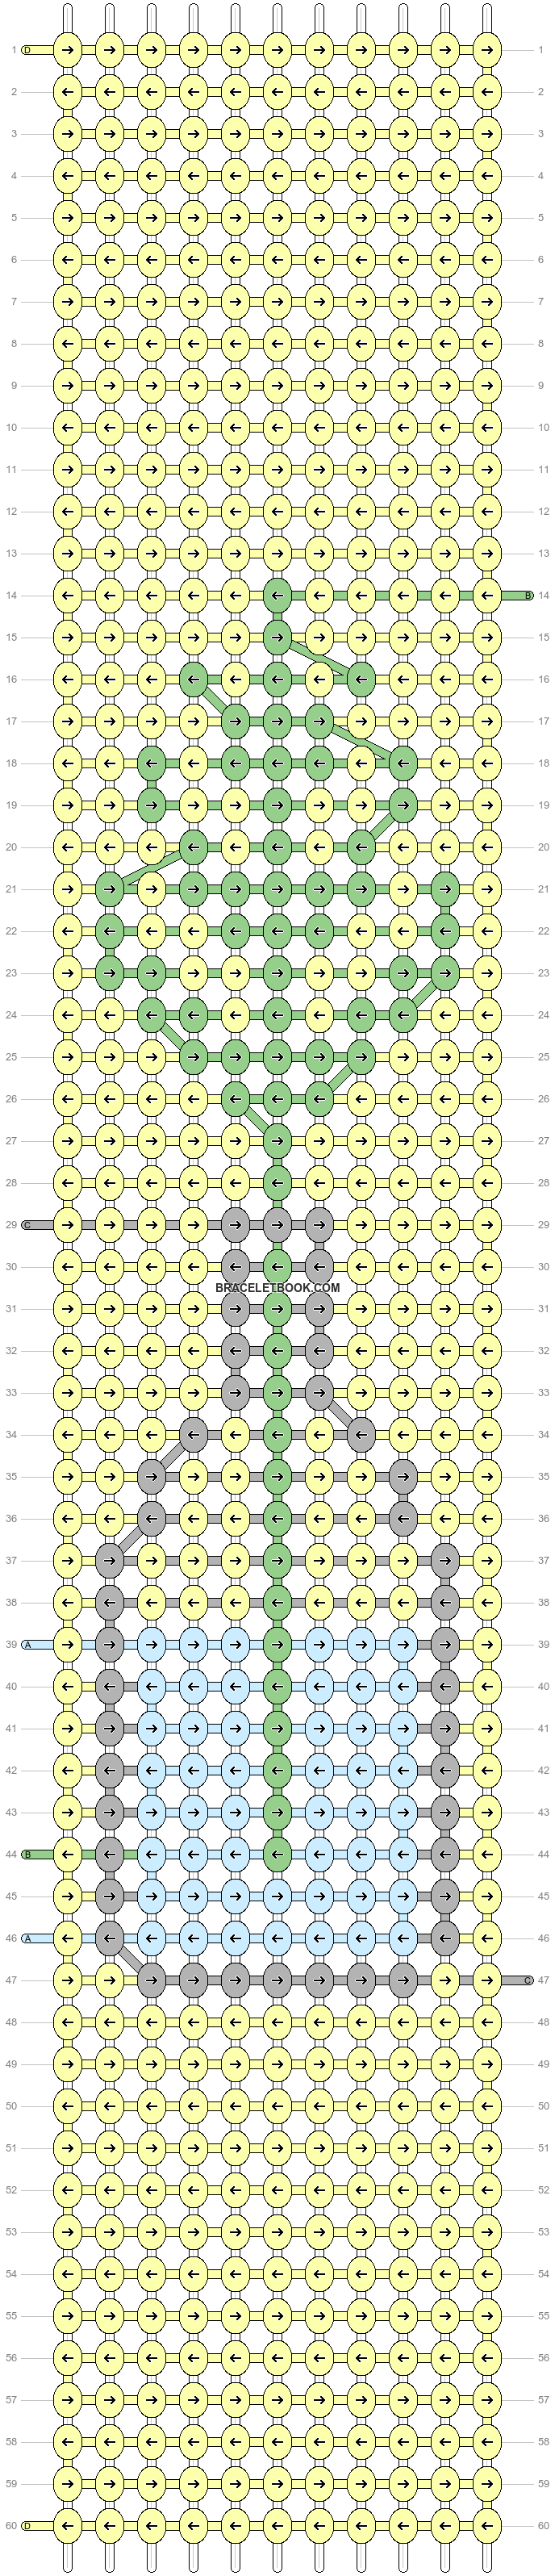 Alpha pattern #38260 variation #130084 pattern